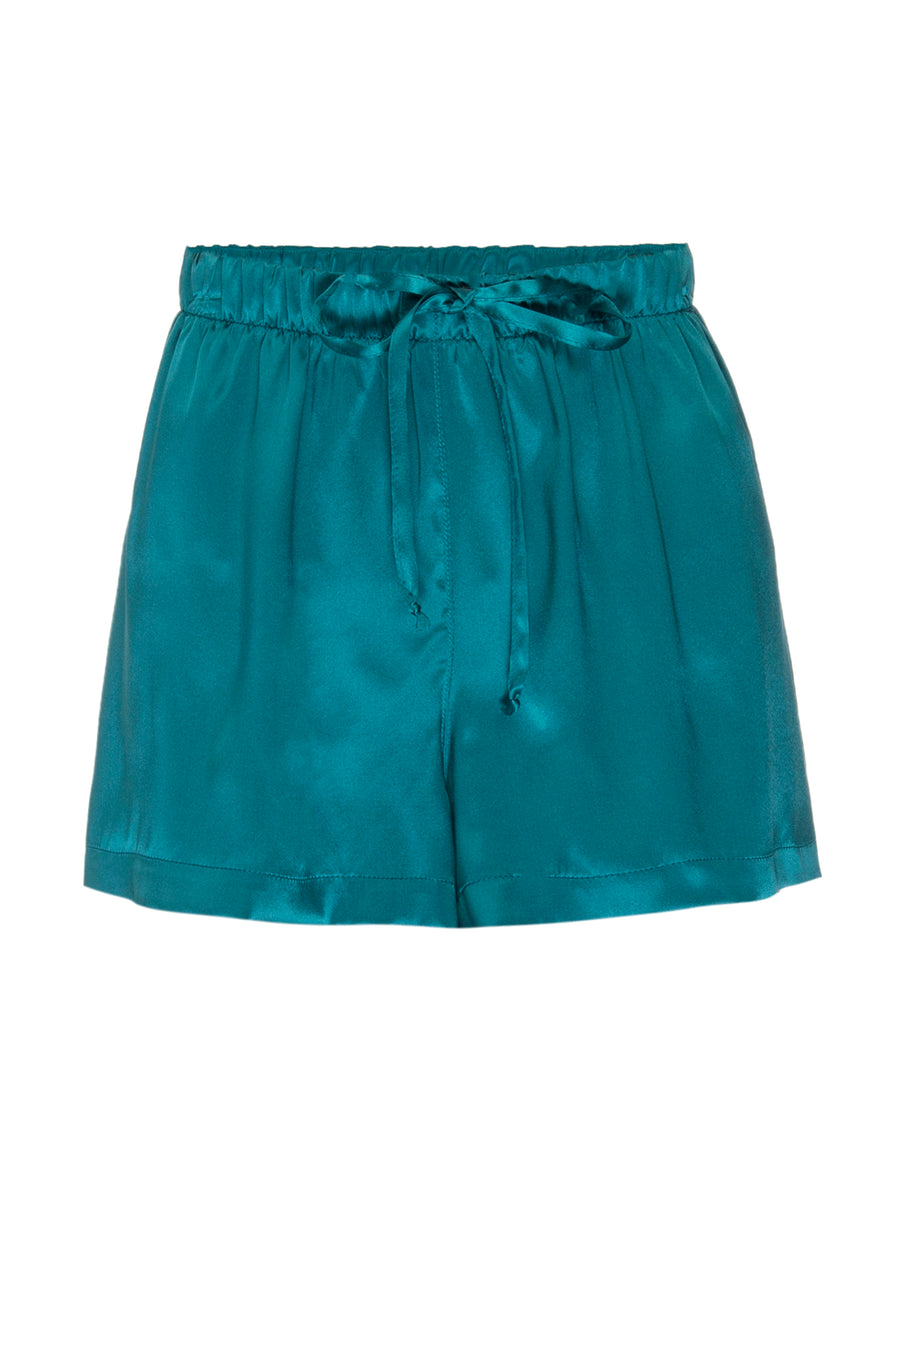 Silk Charmeuse PJ Shorts: Emerald